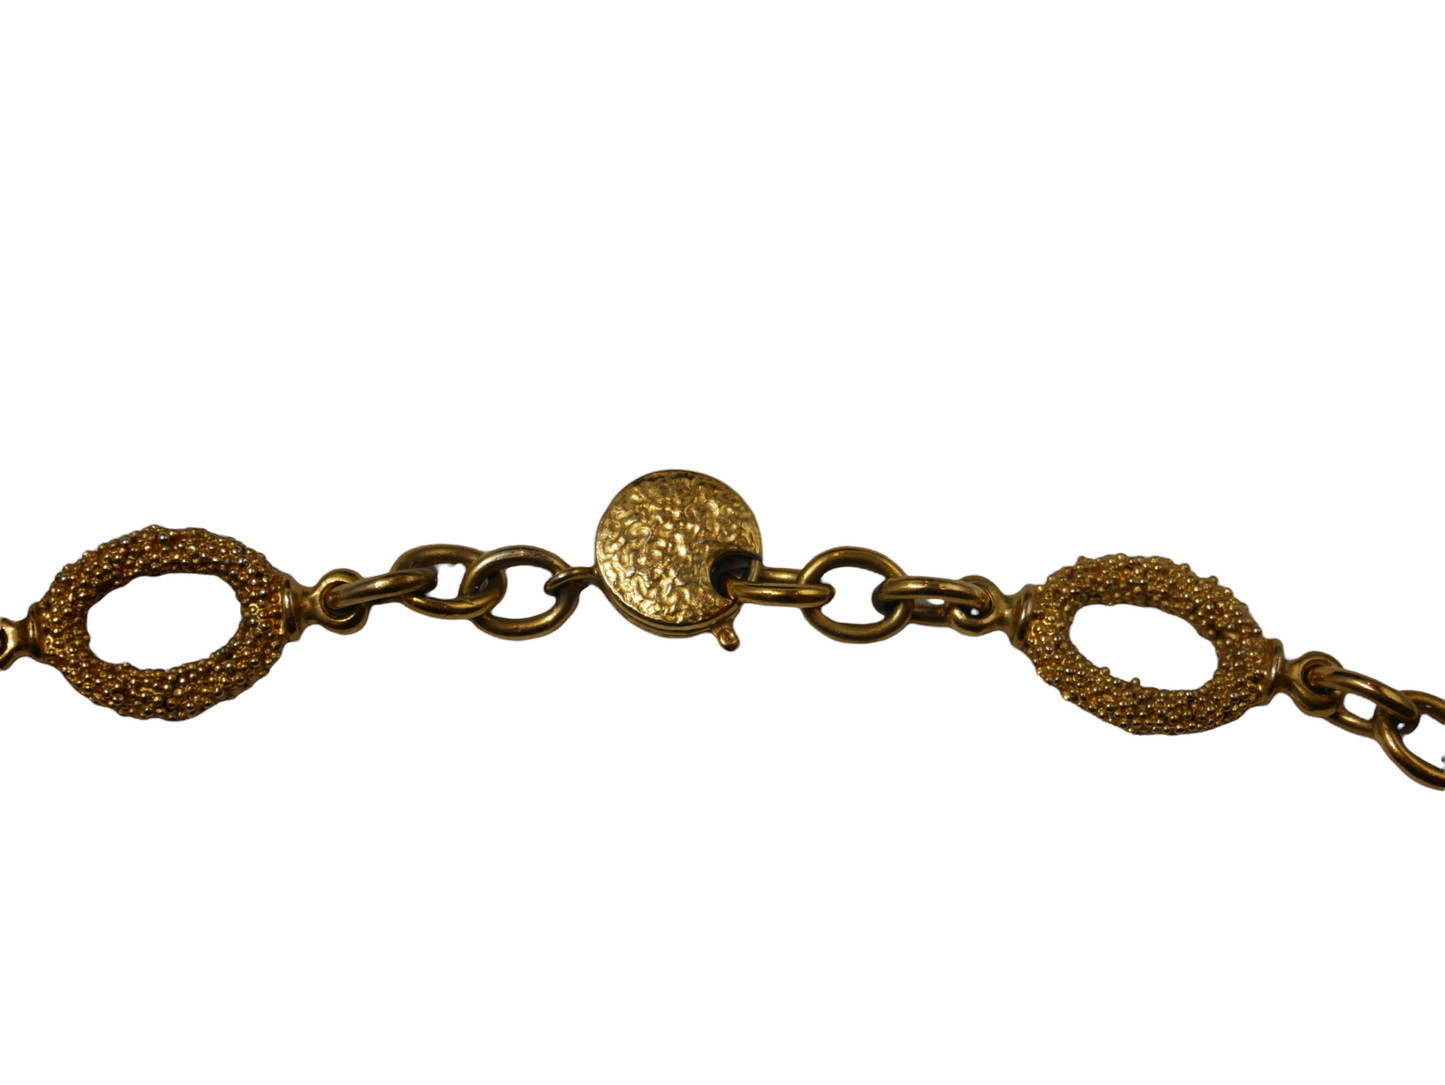 Saint Laurent vintage gold necklace in geometrical form  - 1990s